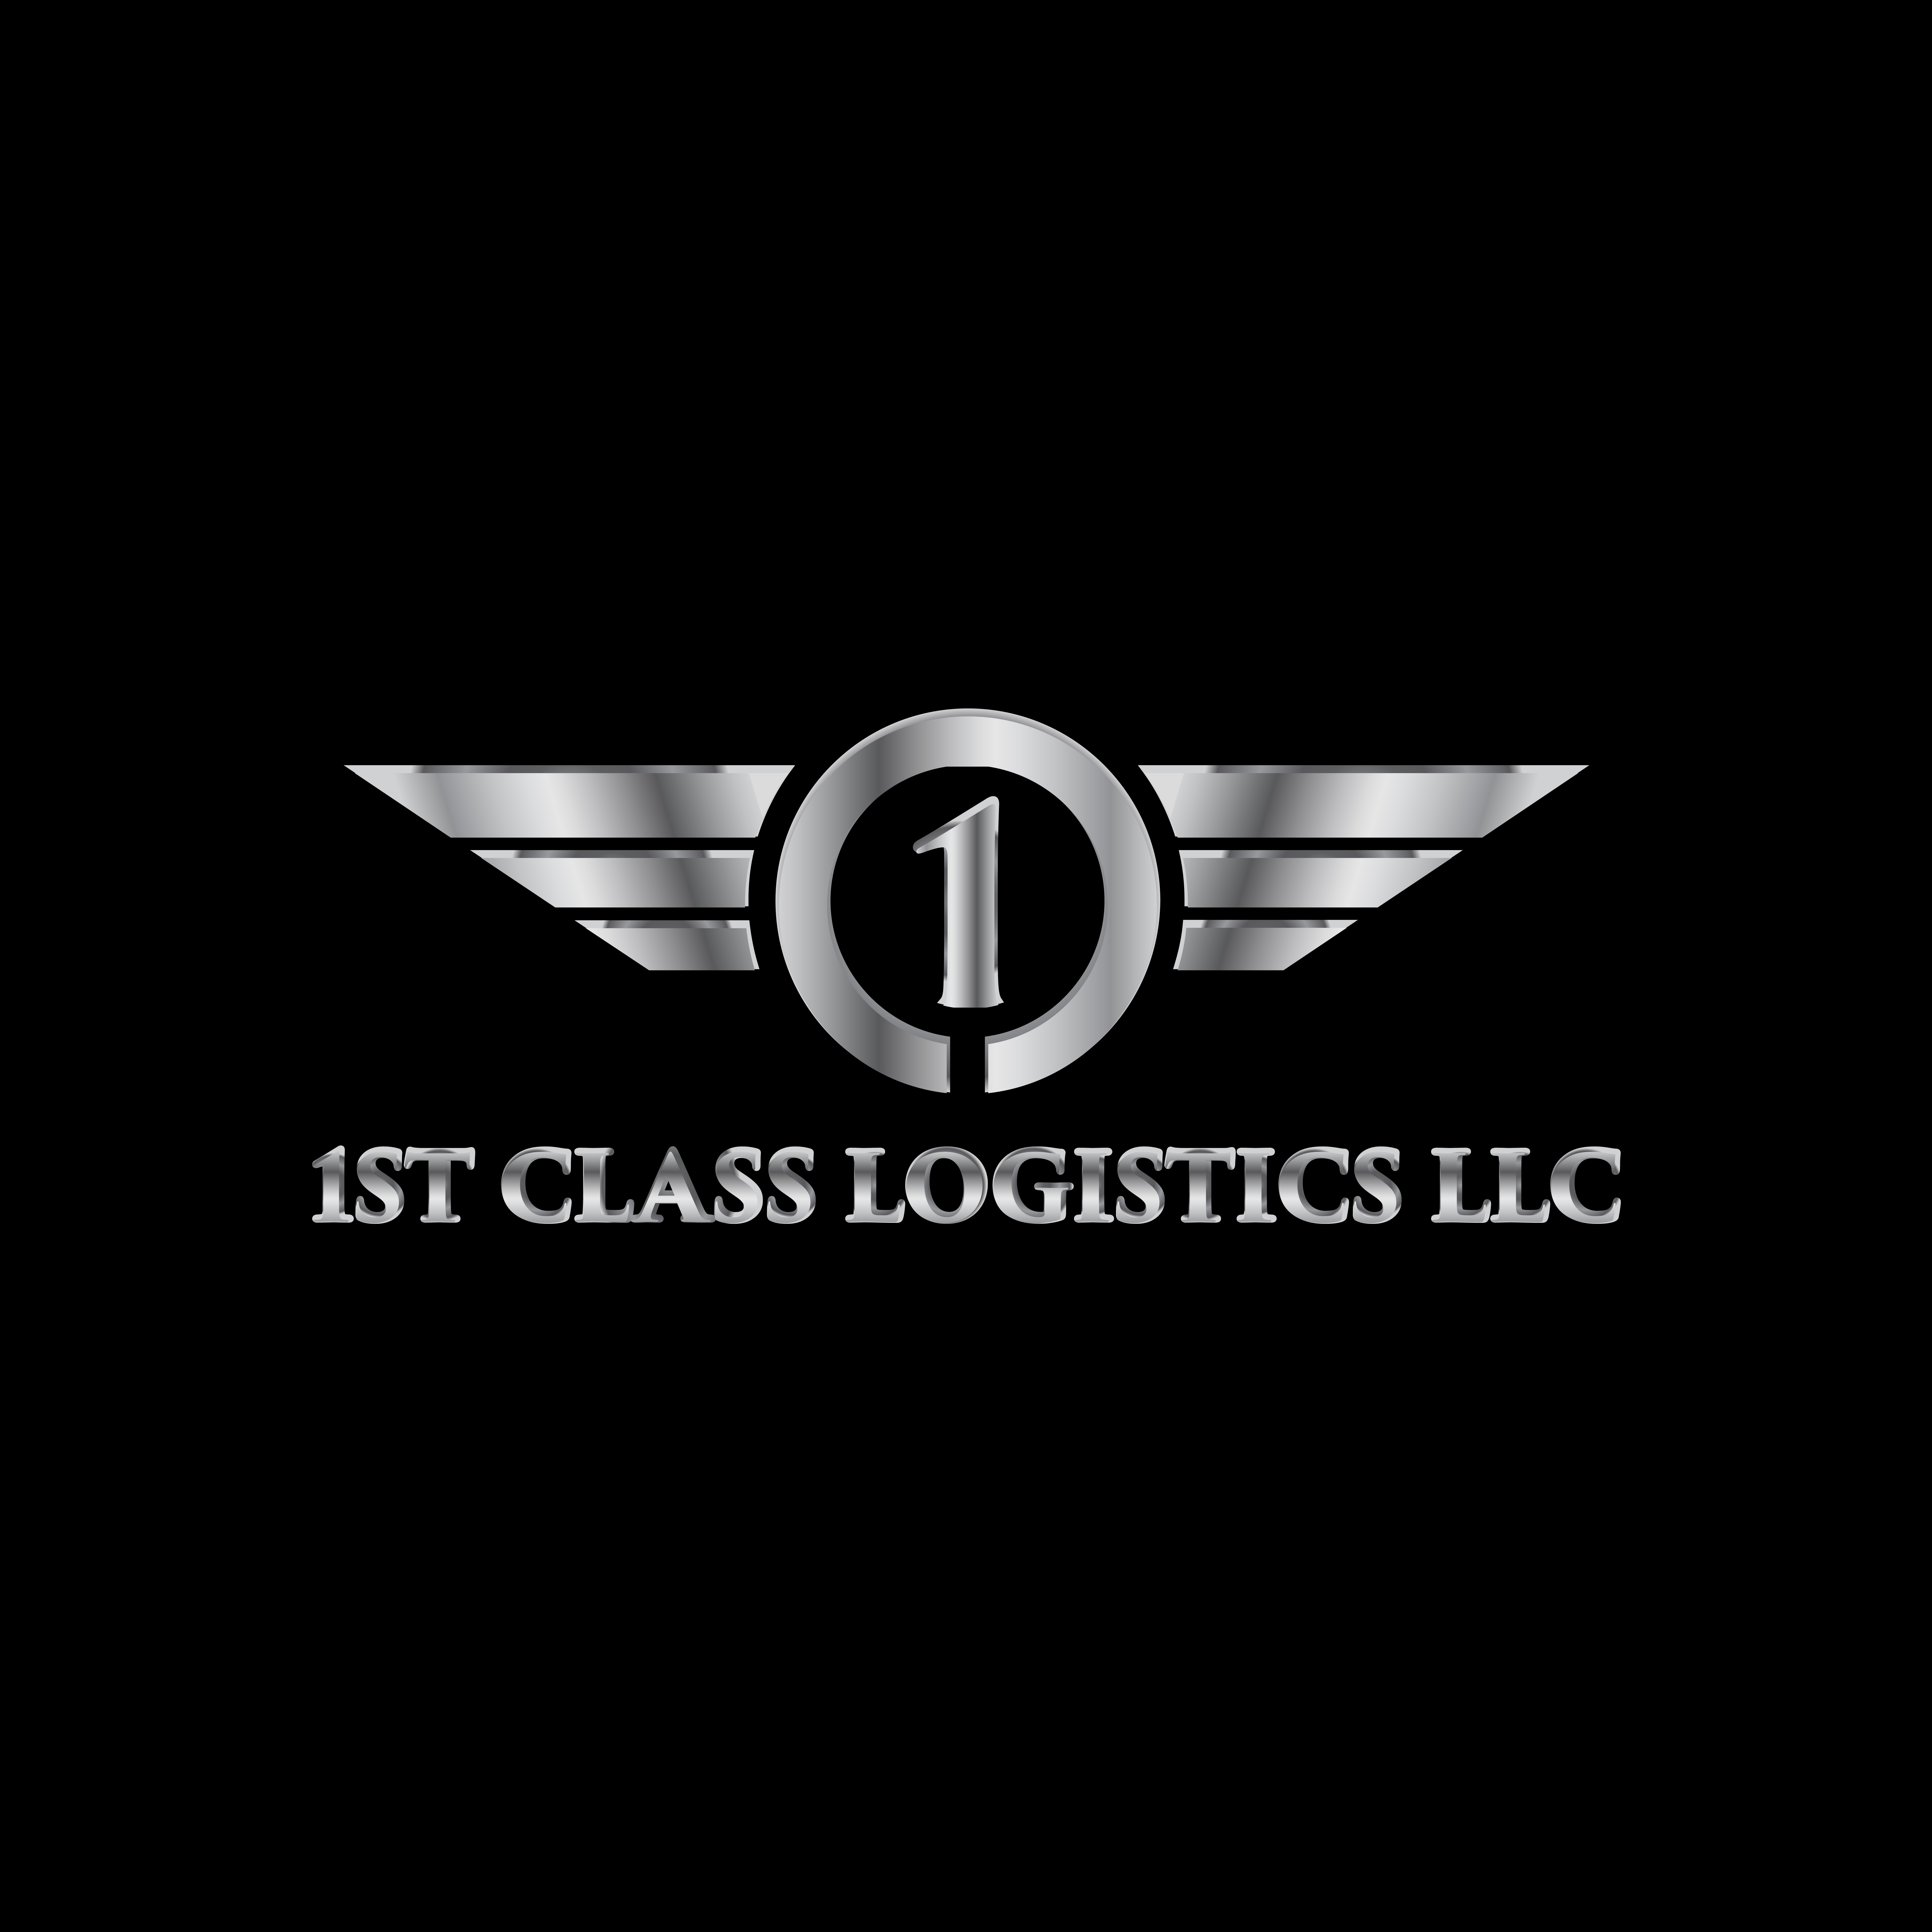 1st Class Logistics